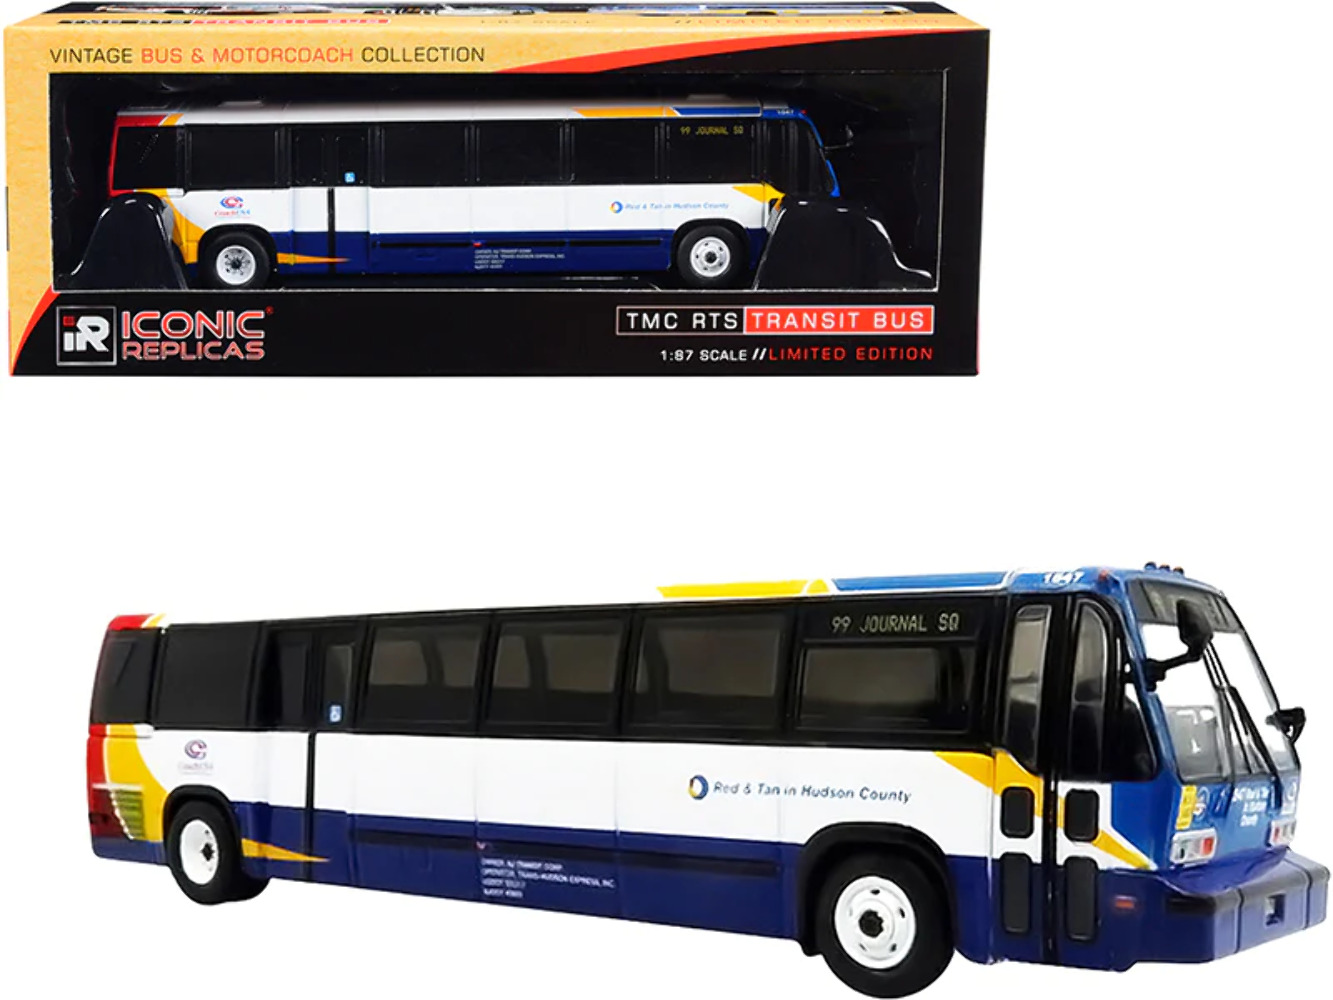 1999 TMC RTS Transit Bus #99 Journal Square Coach USA \